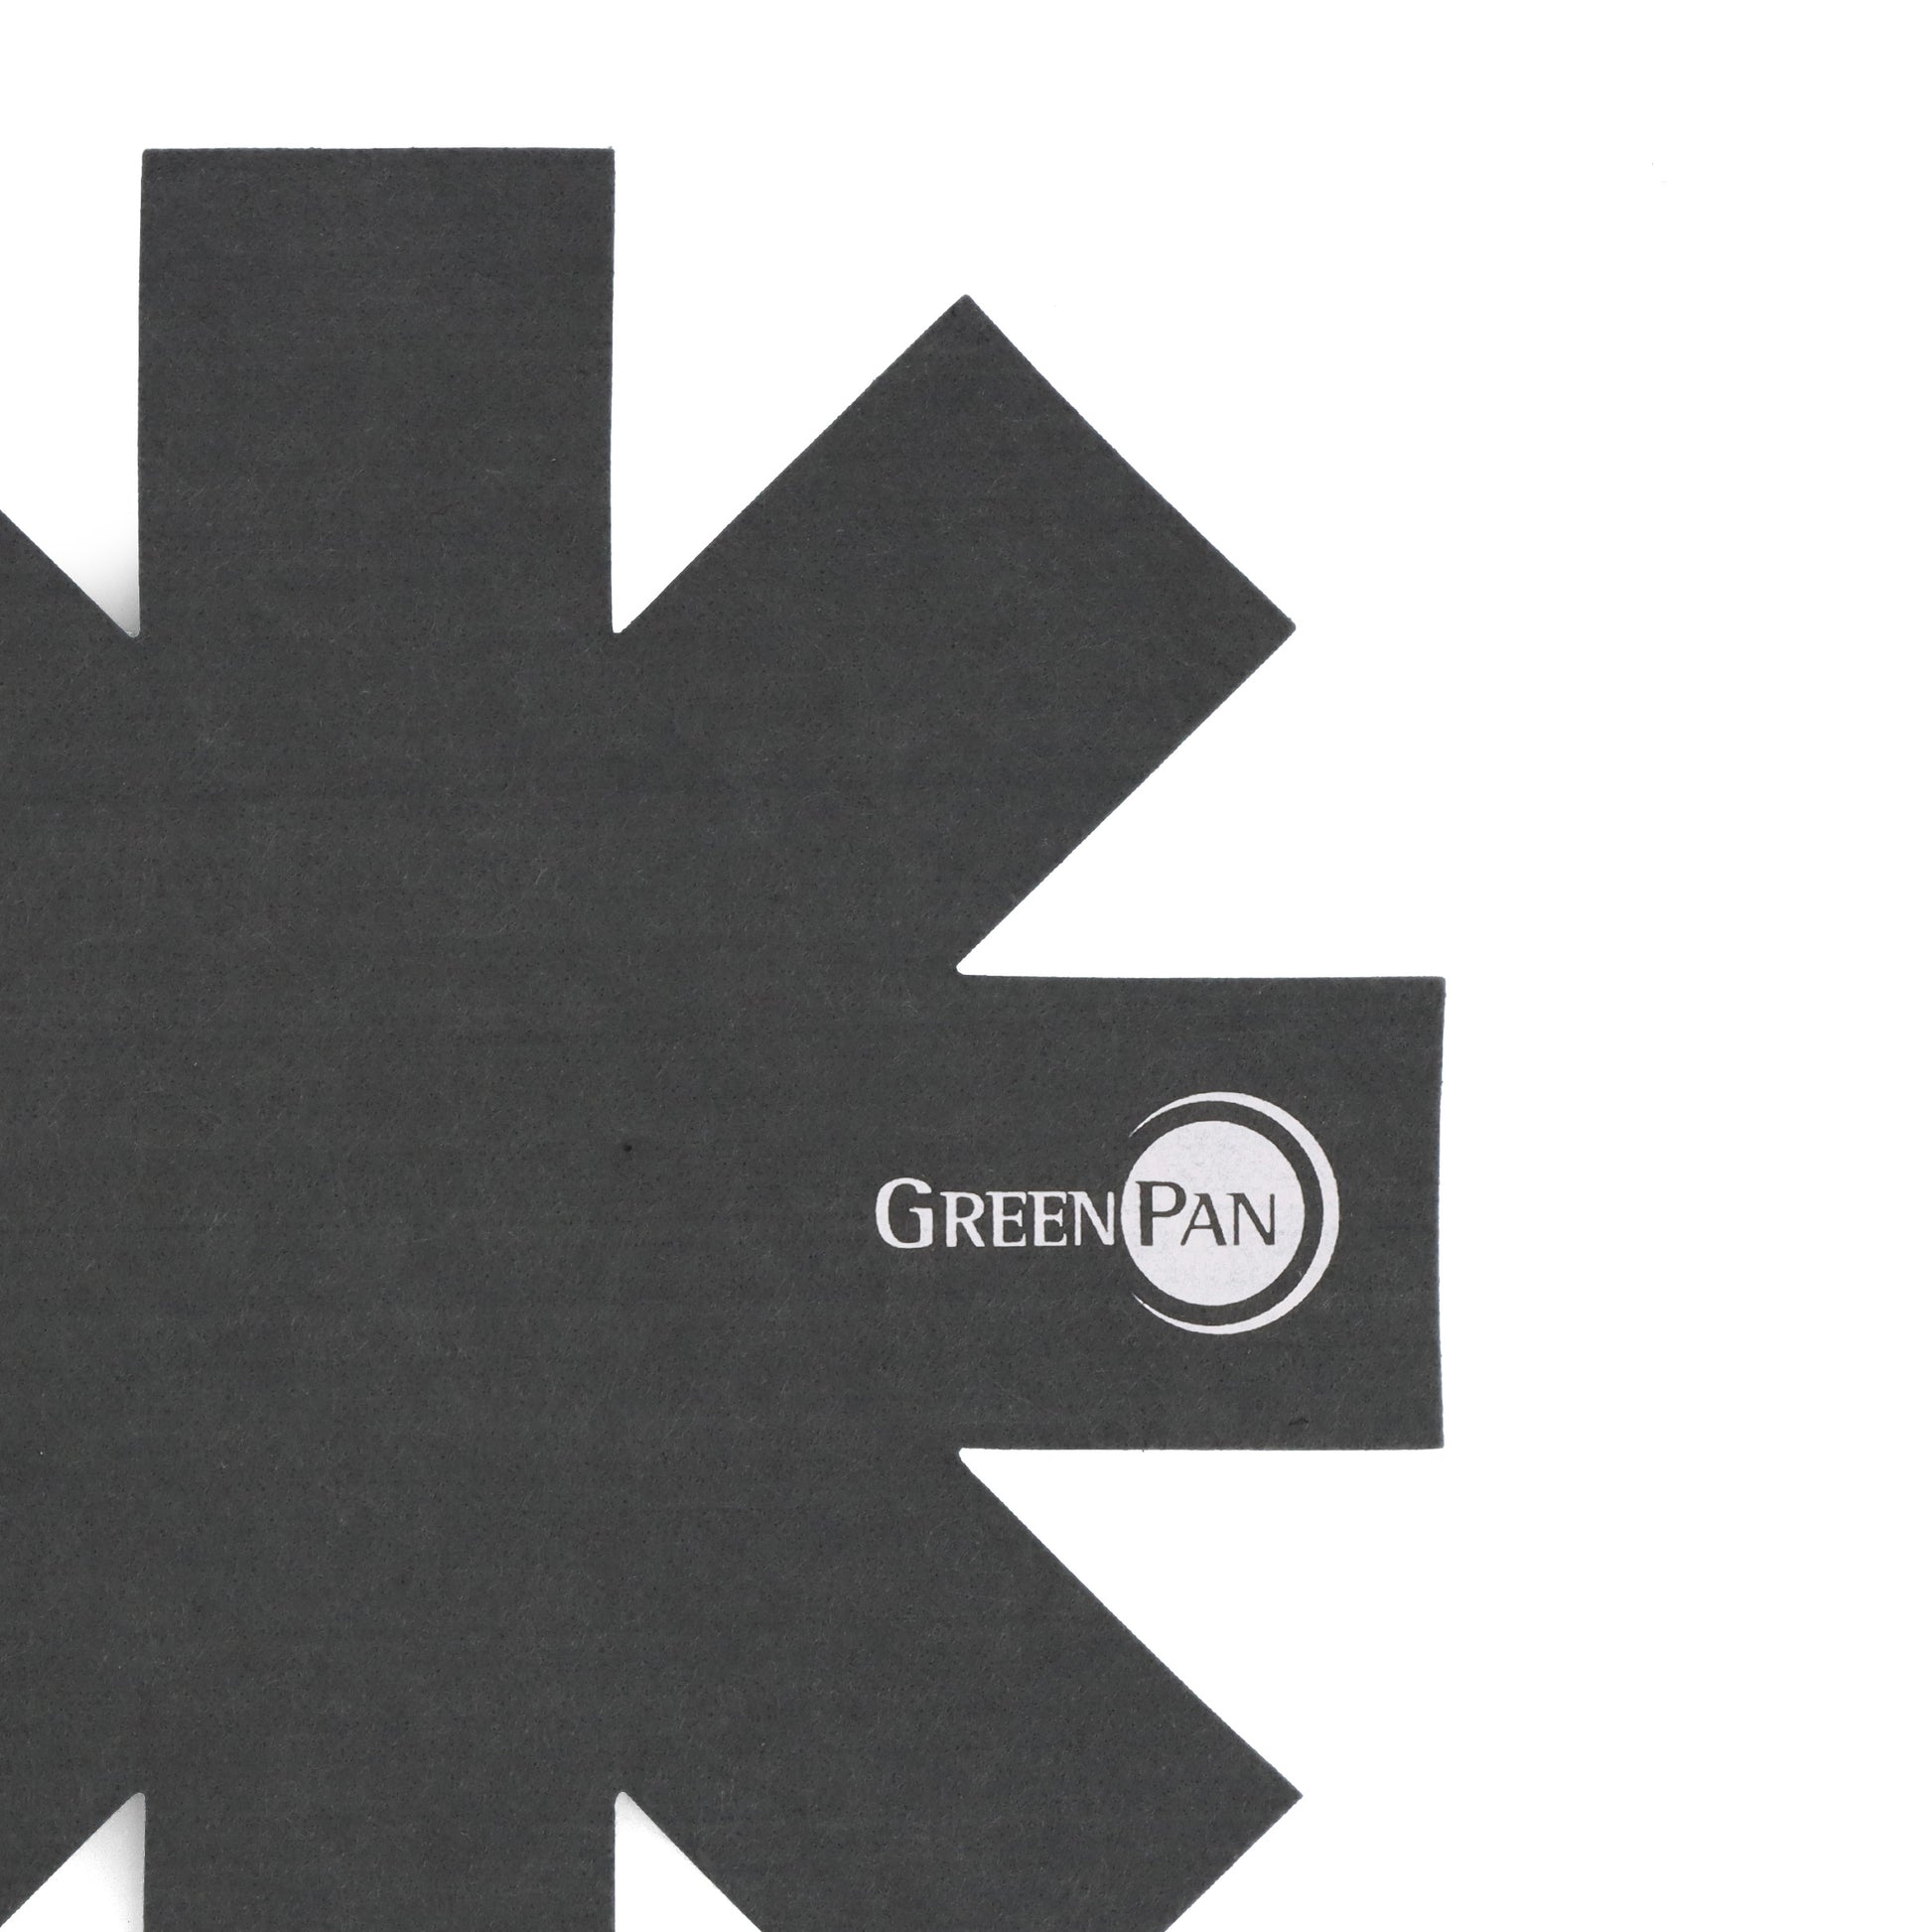 Greenpan Panbeschermer 3 stuks (small, medium & large)  vooraanzicht  